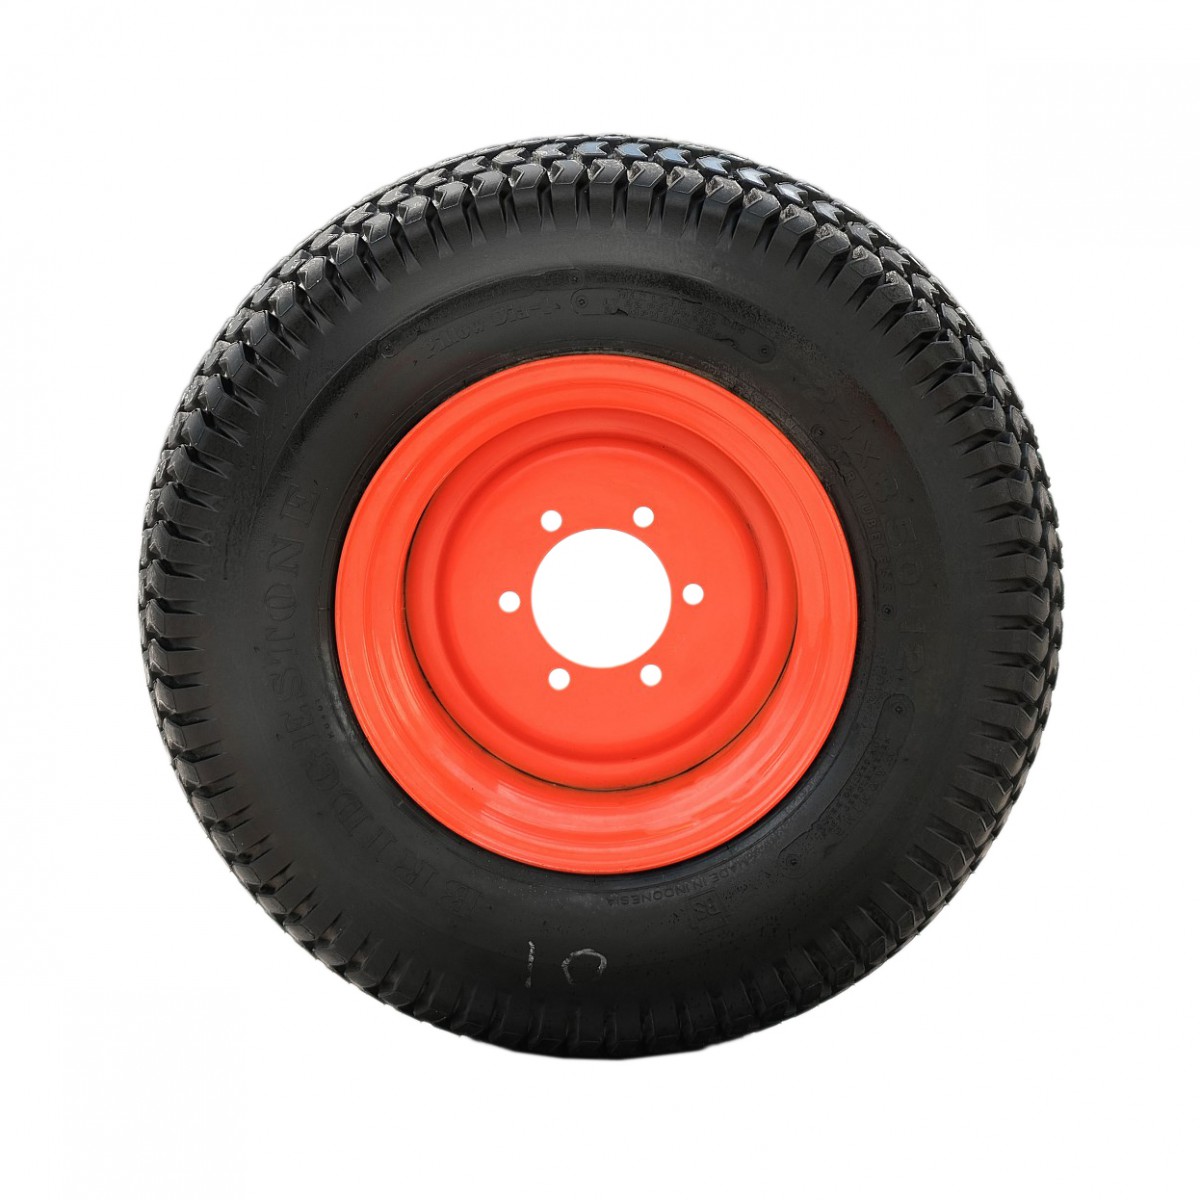 Complete wheel 24x8.50-12 / grass tire